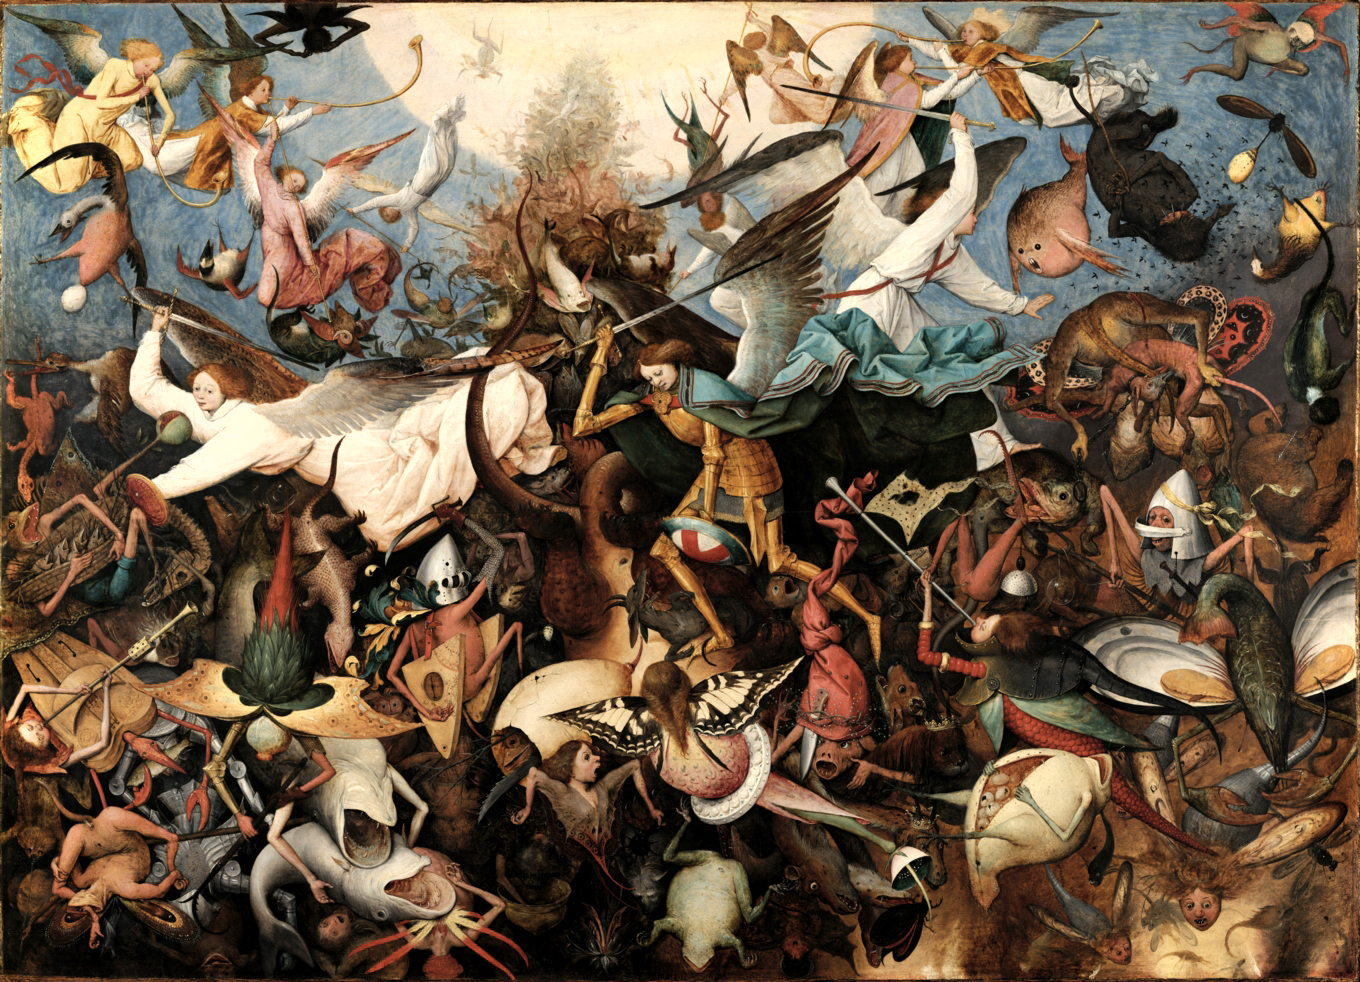 Pieter_Bruegel_the_Elder_-_The_Fall_of_the_Rebel_Angels_-_RMFAB_584_(derivative_work)